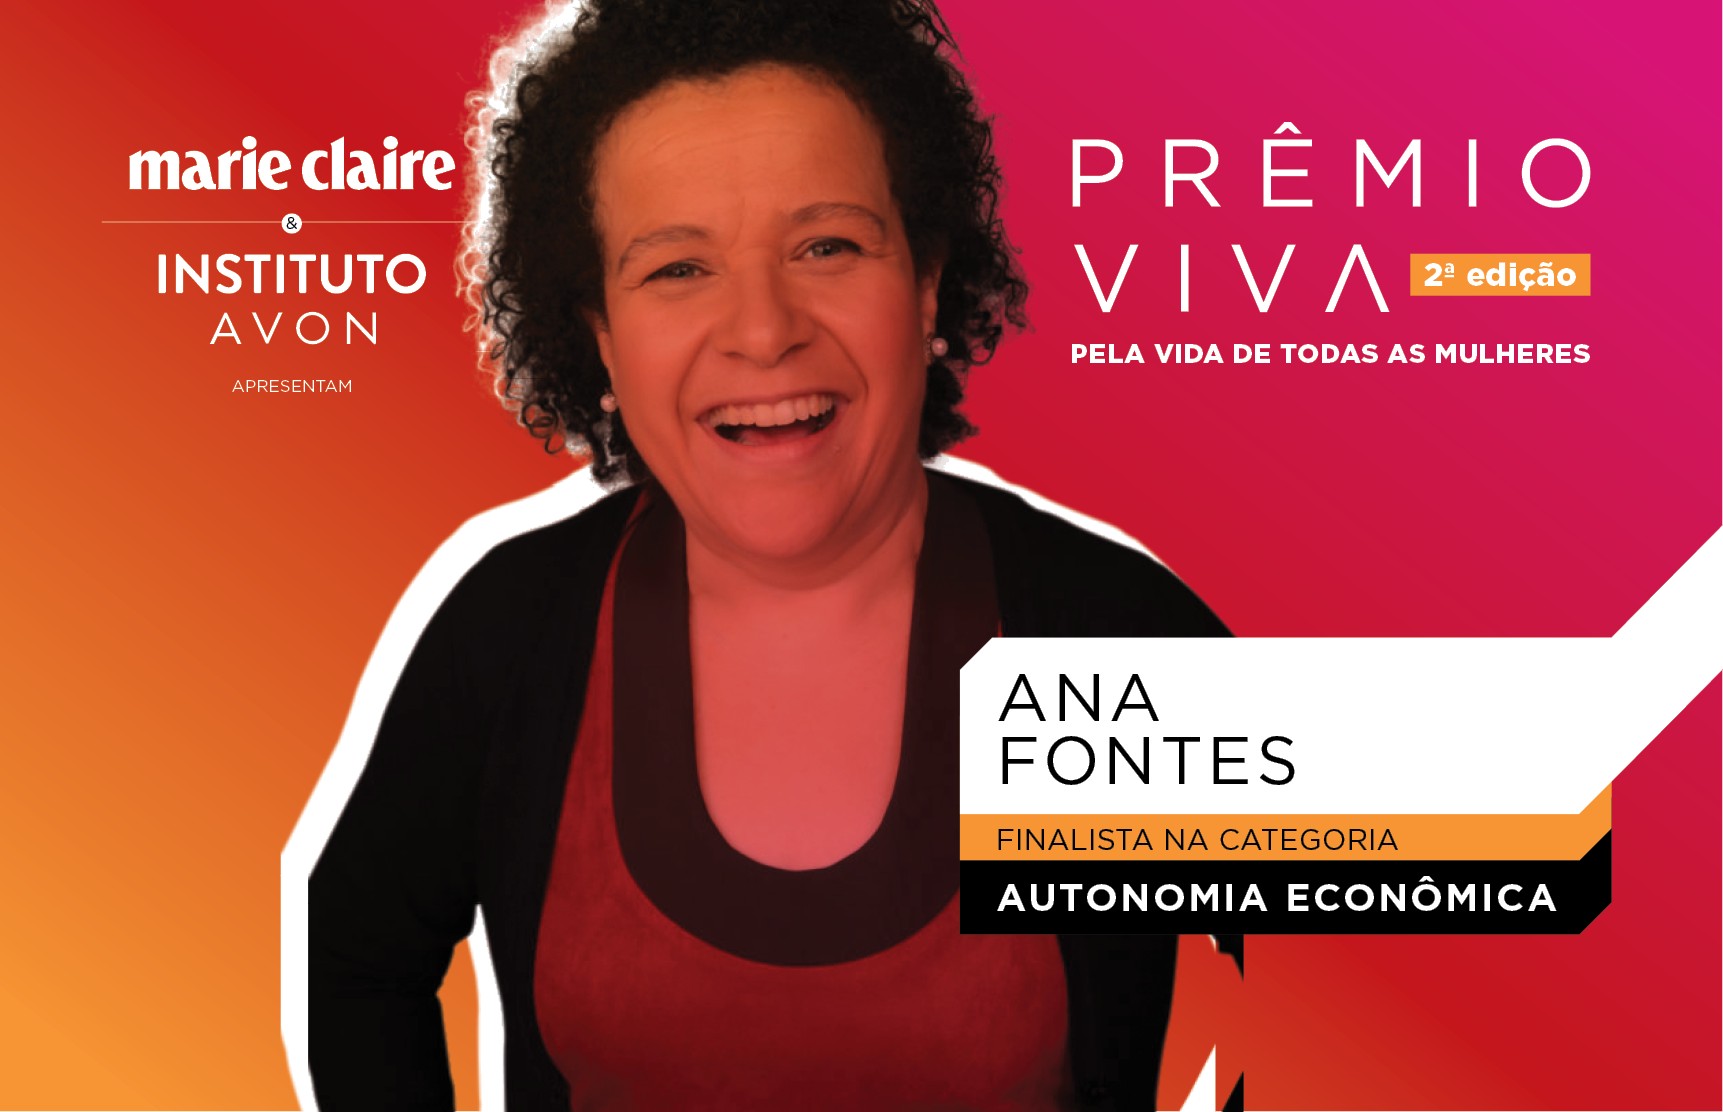 Ana Fontes, finalista na categoria Autonomia Econômica (Foto: Marie Claire)